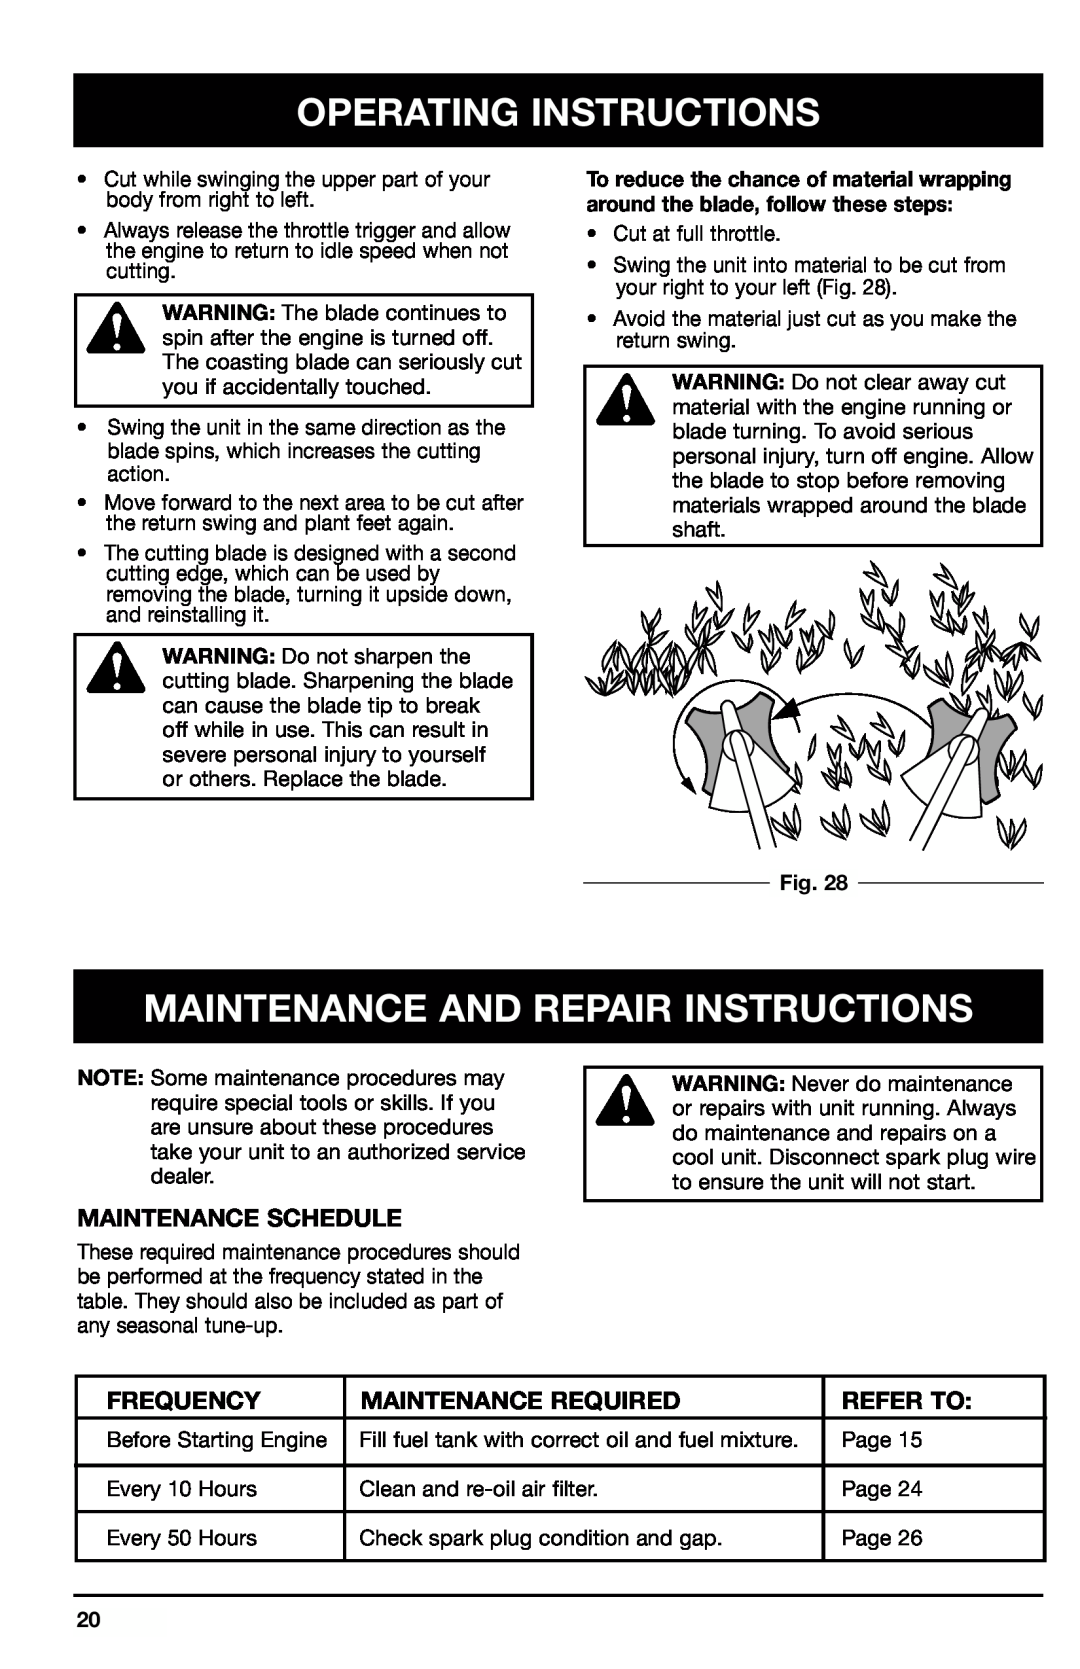 Ryobi 780r manual Maintenance And Repair Instructions, Maintenance Schedule, Frequency, Maintenance Required, Refer To 